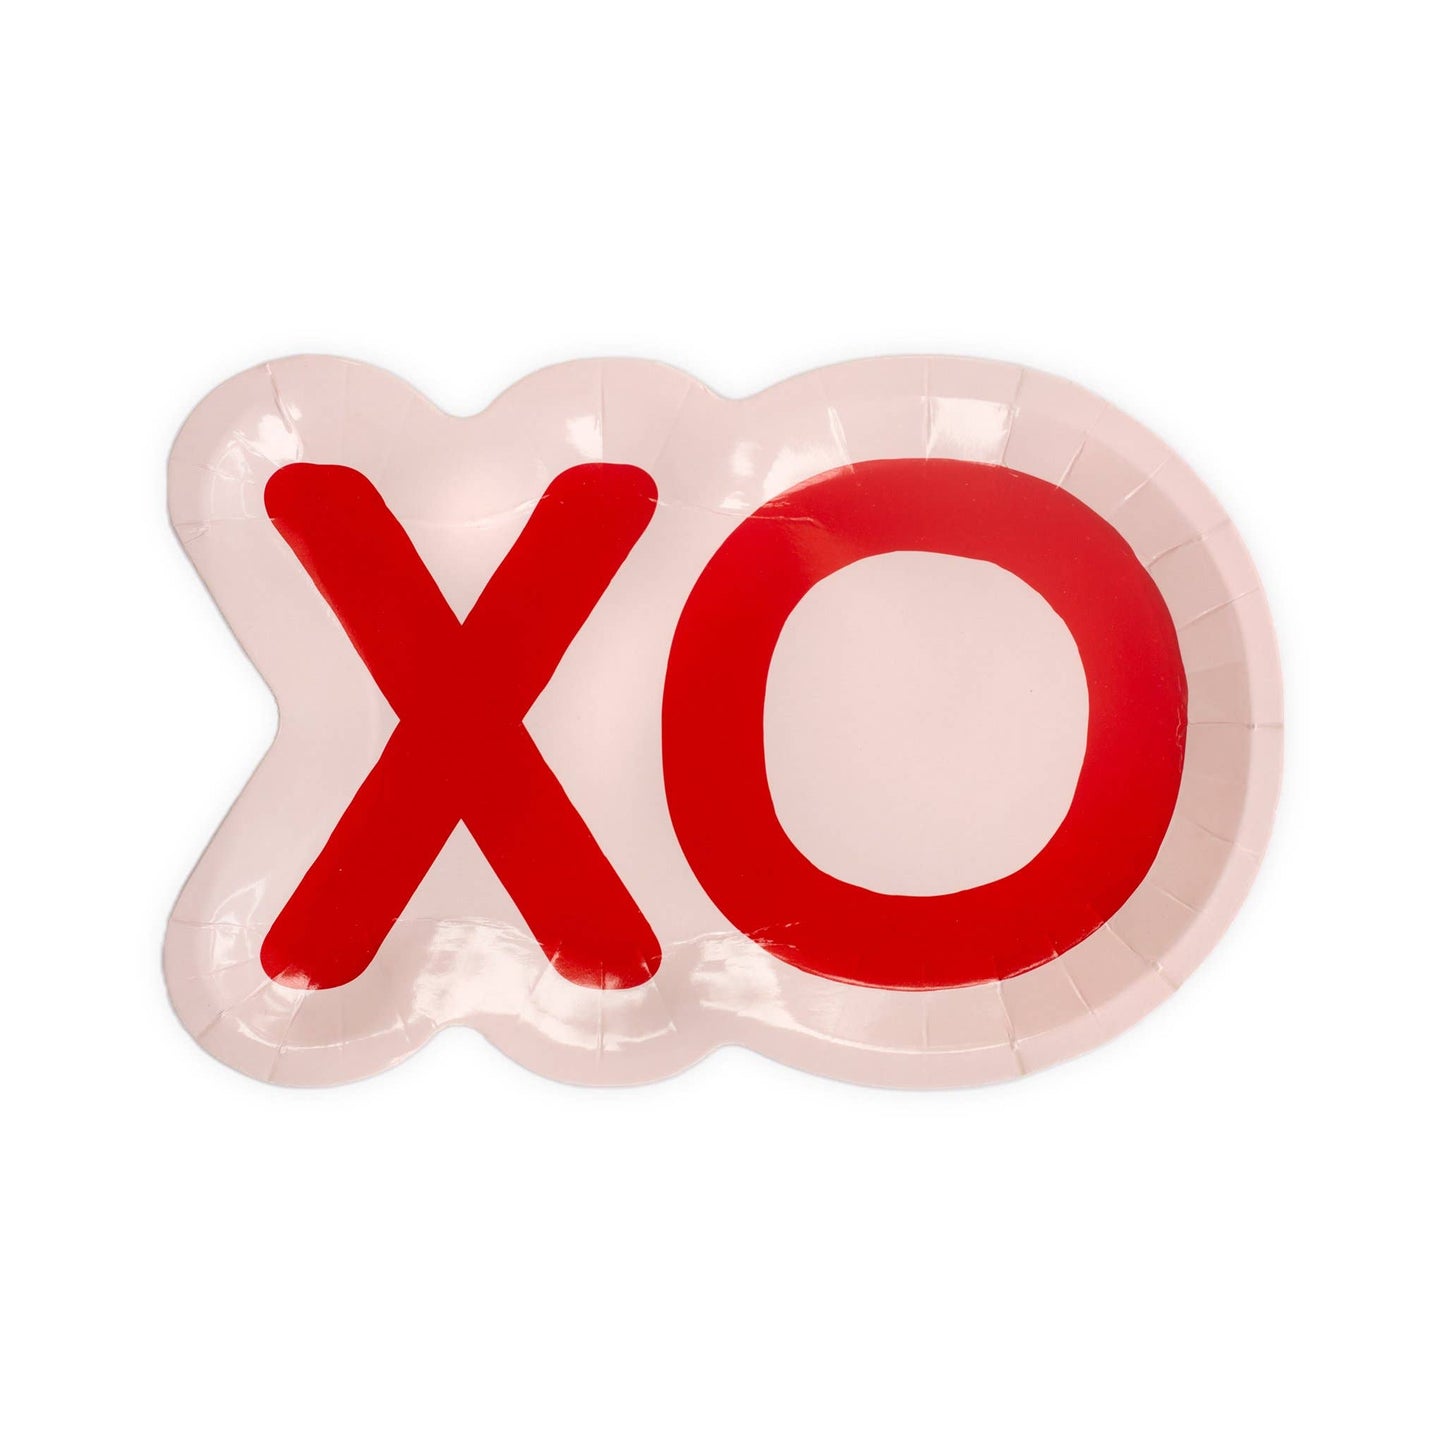 XOXO Shaped Plates (8 ct)